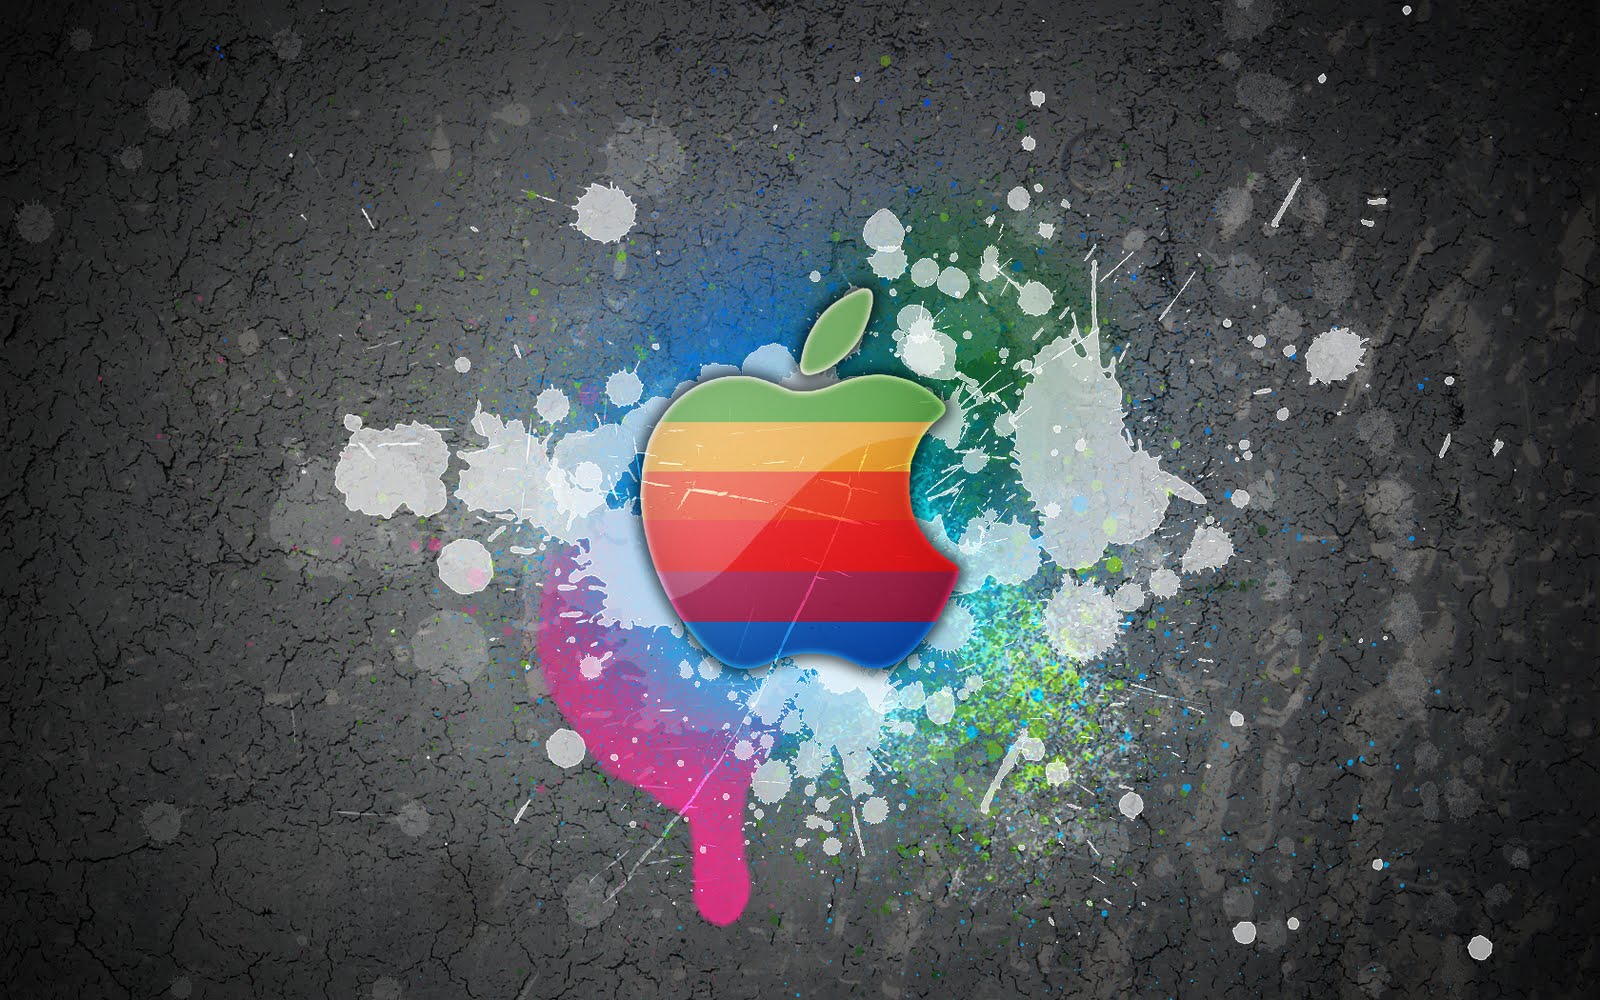 Apple Mac Abstract 3d Wallpaper HD